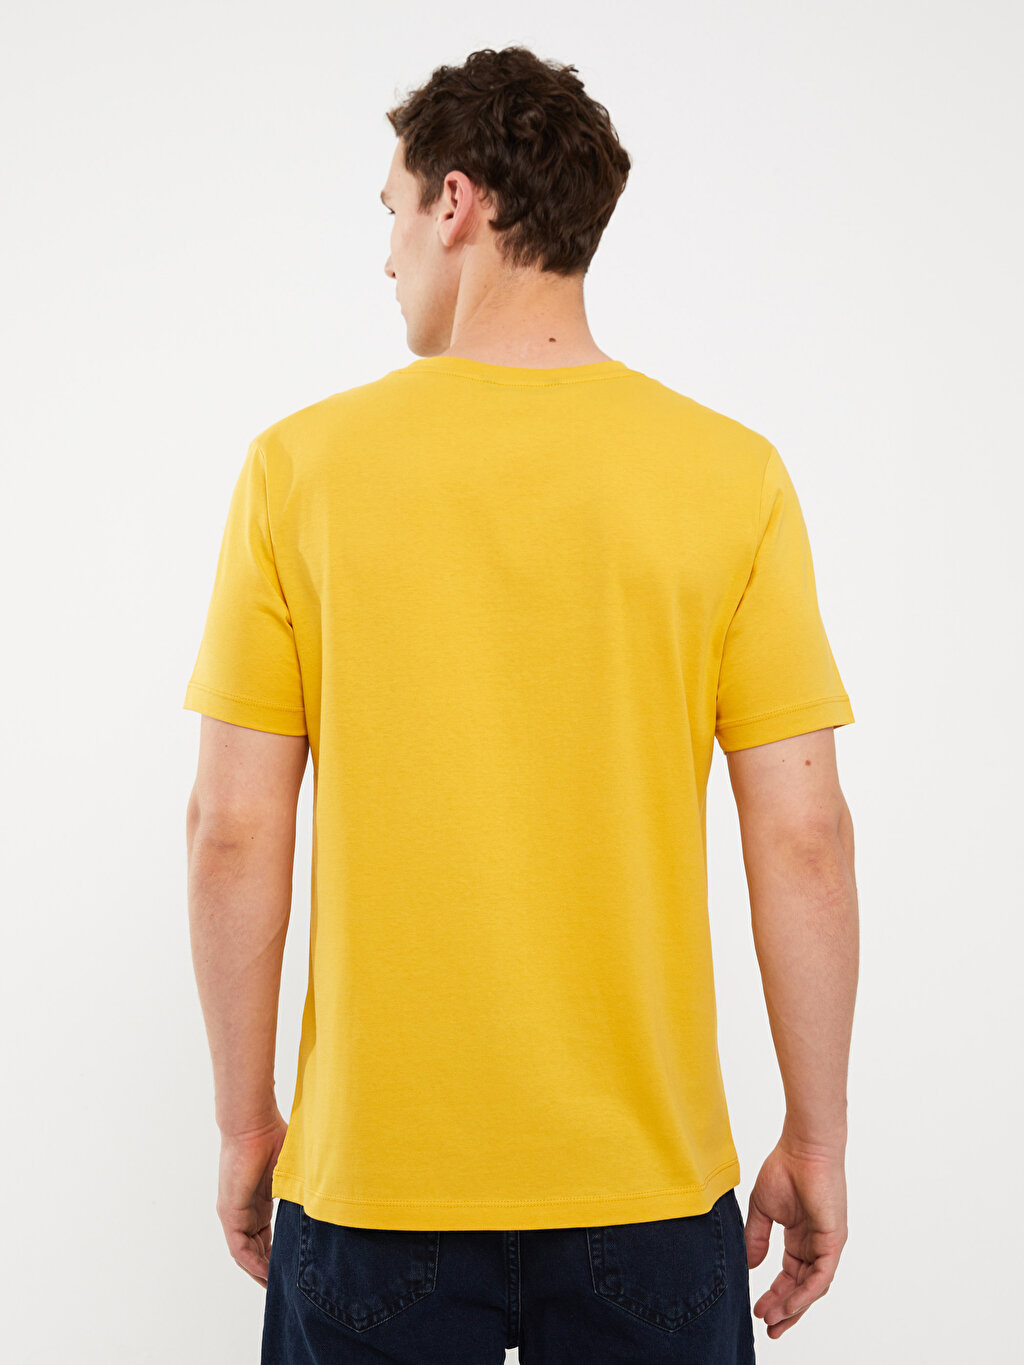 Crew Neck Short Sleeve Printed Combed Cotton Men S T Shirt S3cq56z8 R78 S3cq56z8 R78 Lc Waikiki